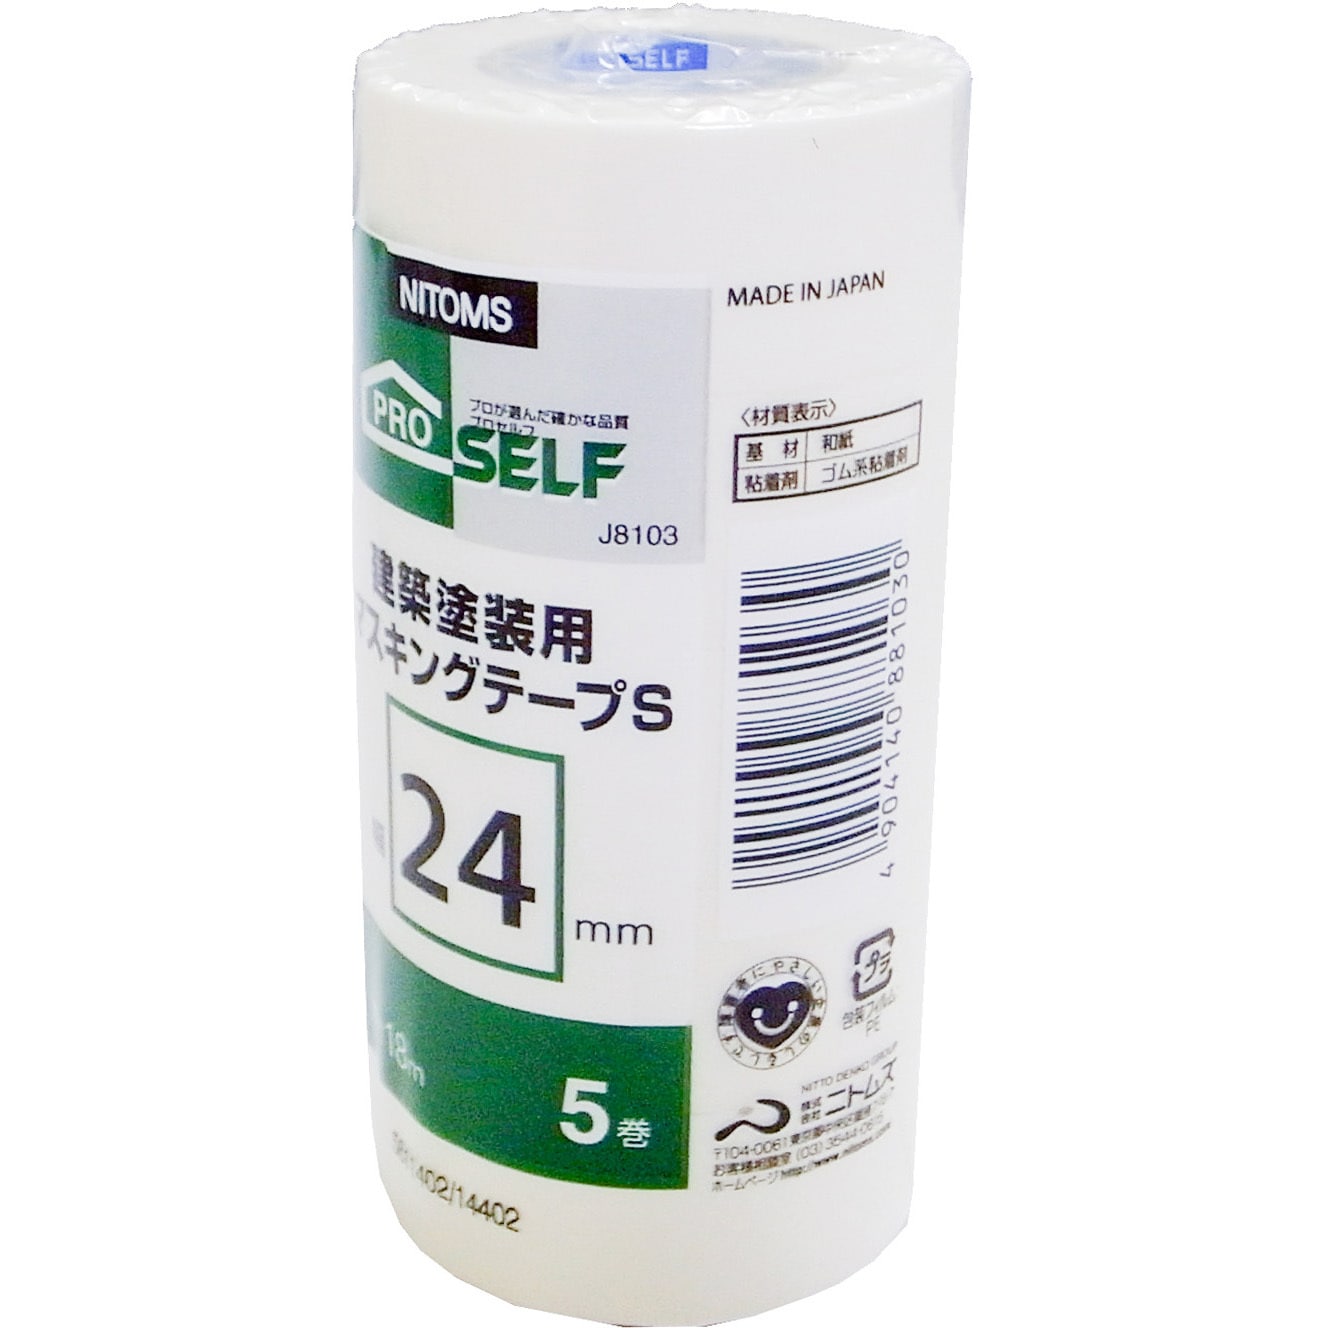 J8103 マスキングテープ(建築塗装用) 1セット(5巻) ニトムズ 【通販